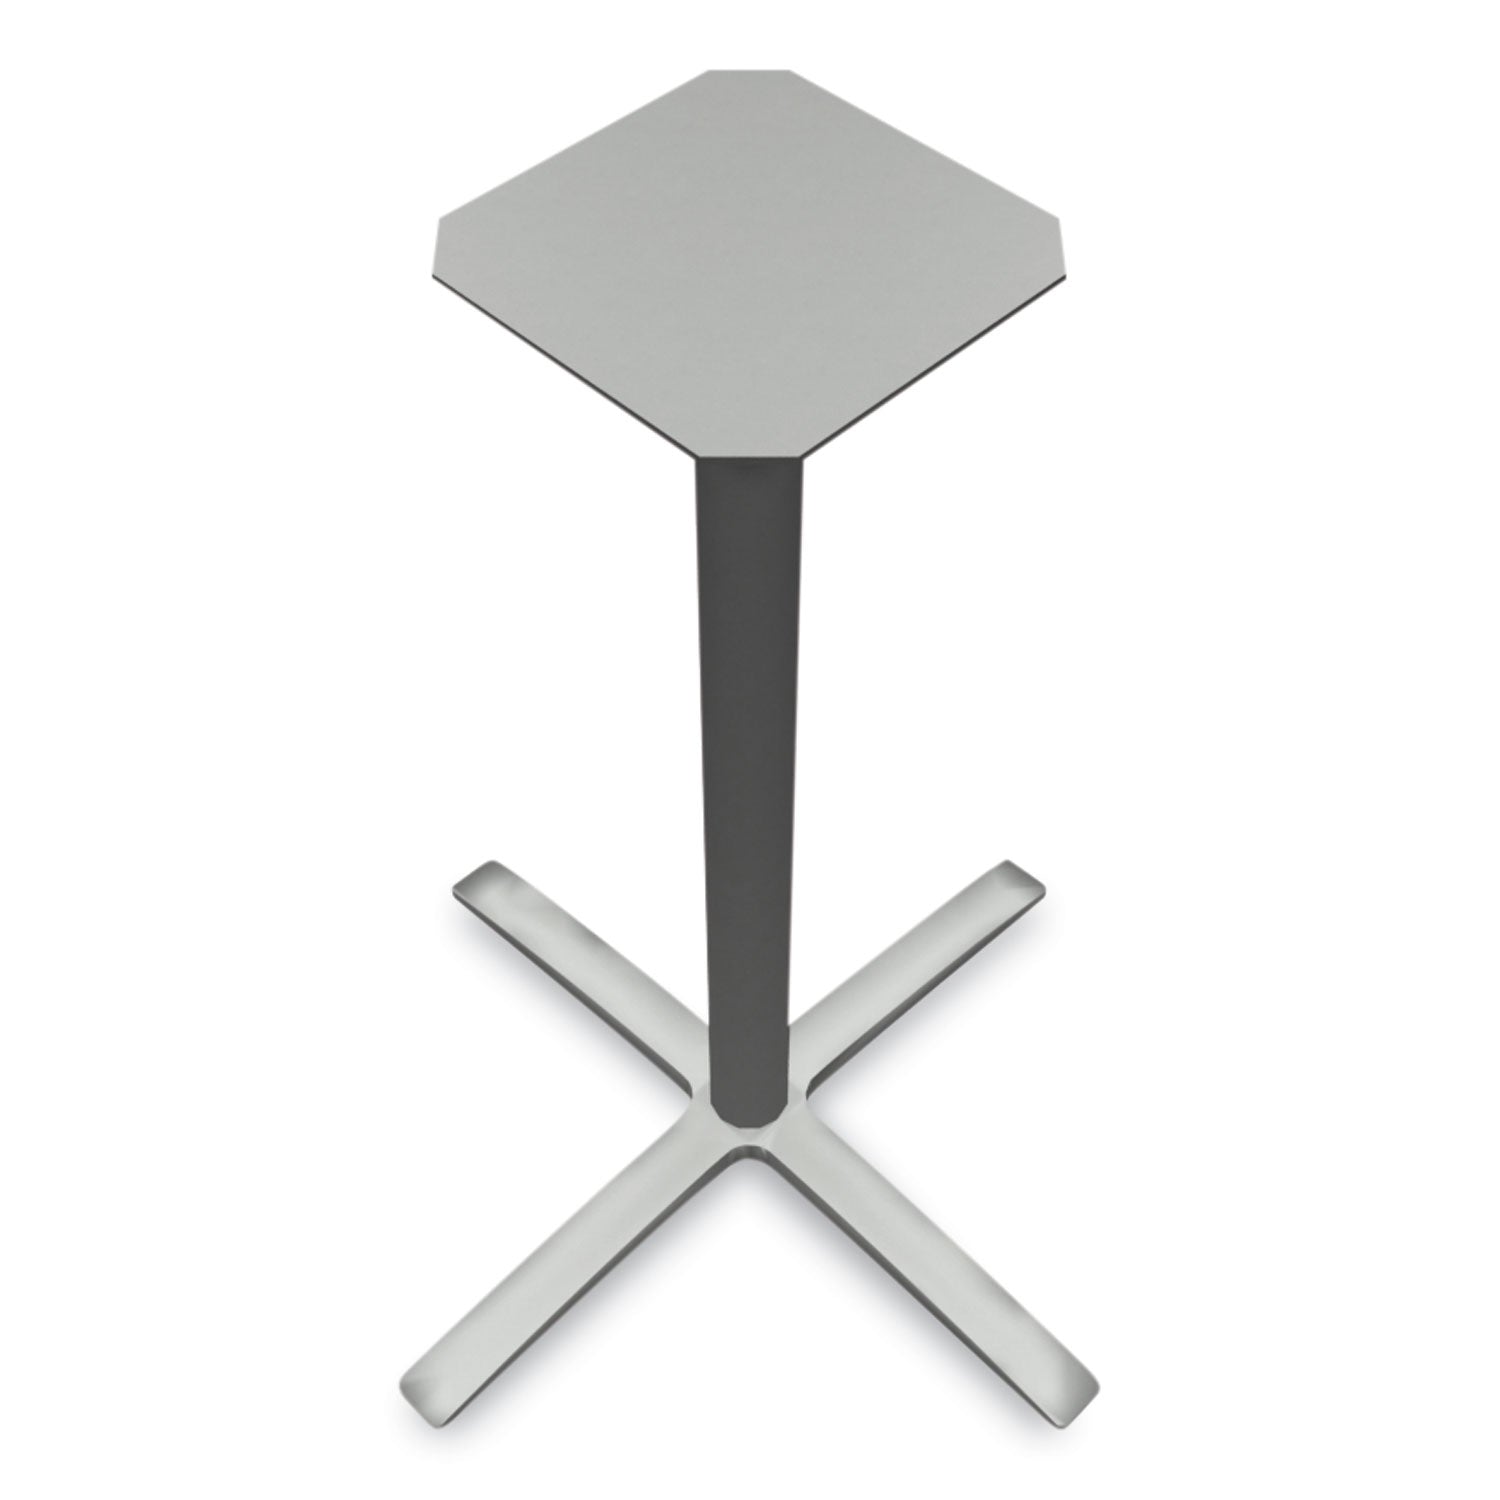 between-standing-height-x-base-for-42-table-tops-3268w-x-4112h-silver_honbtx42lpr8 - 3